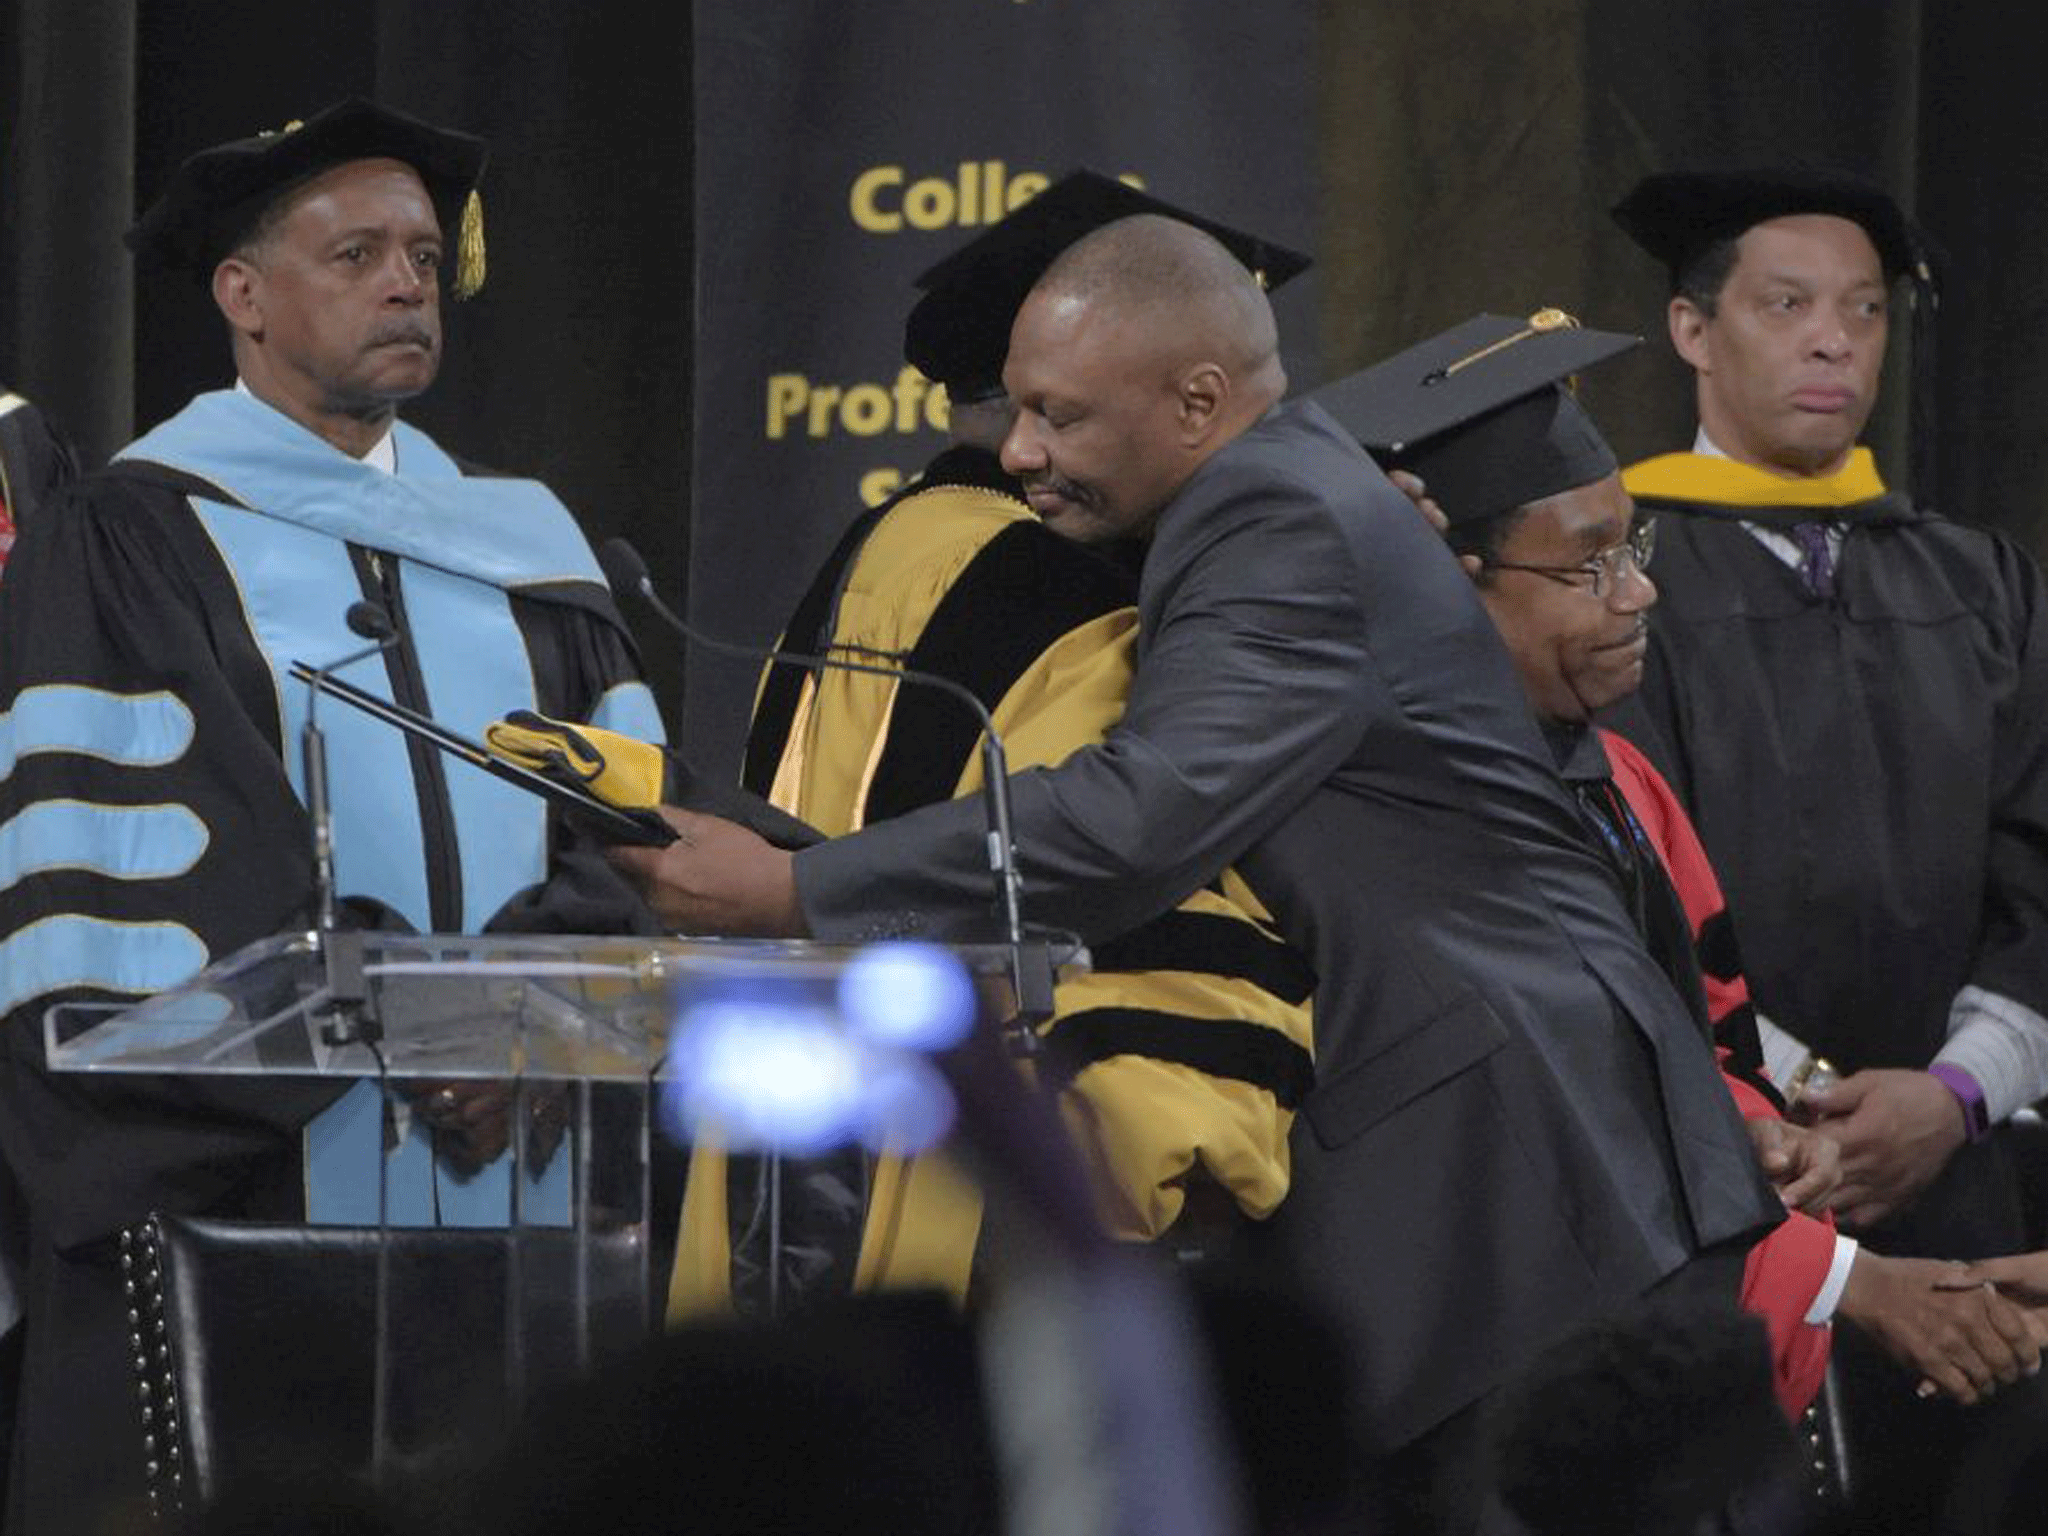 Black student murdered in 'hate crime' awarded pothumous degree